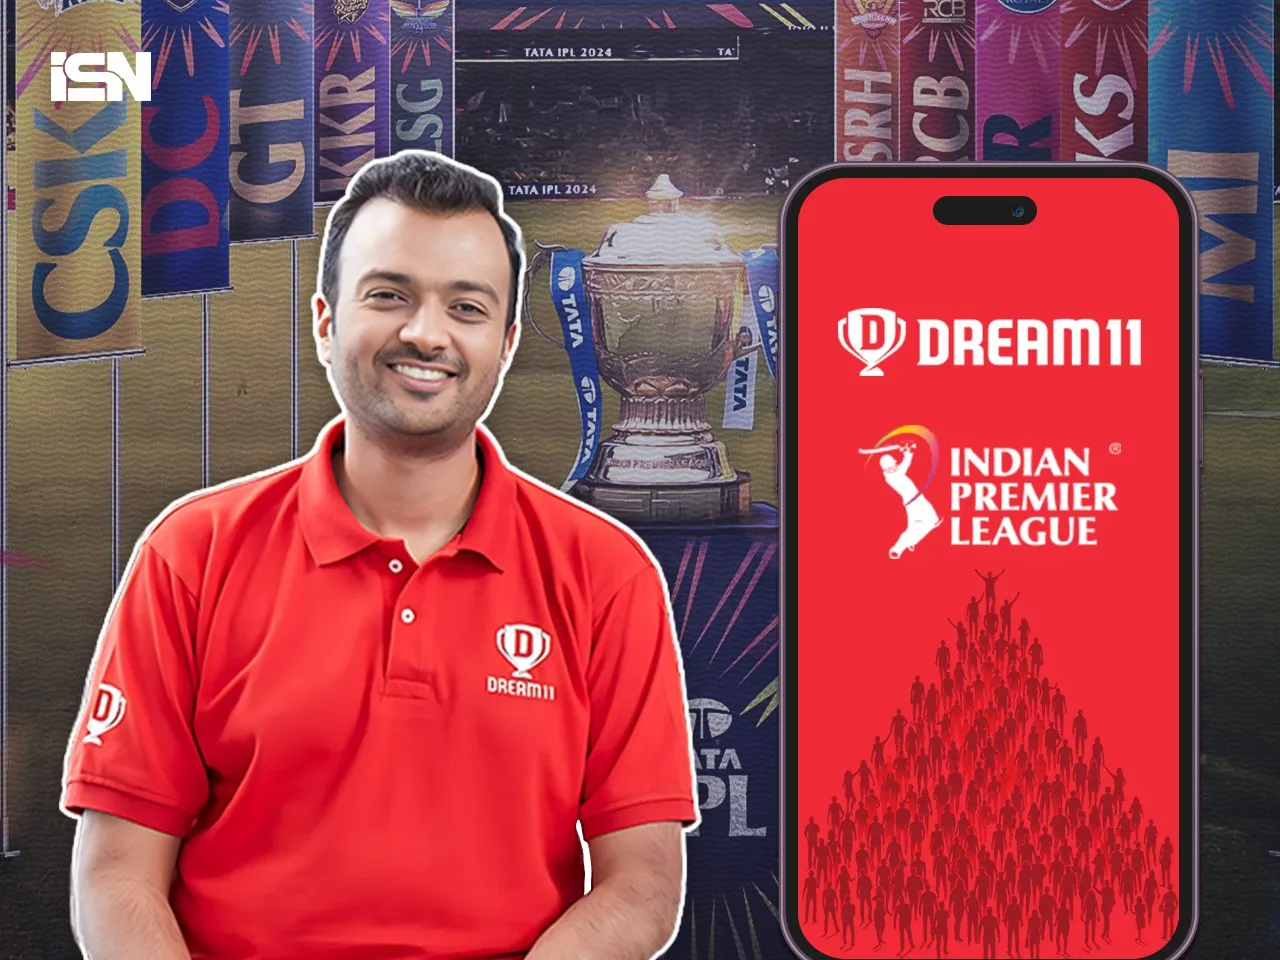 Dream11 makes its IPL debut